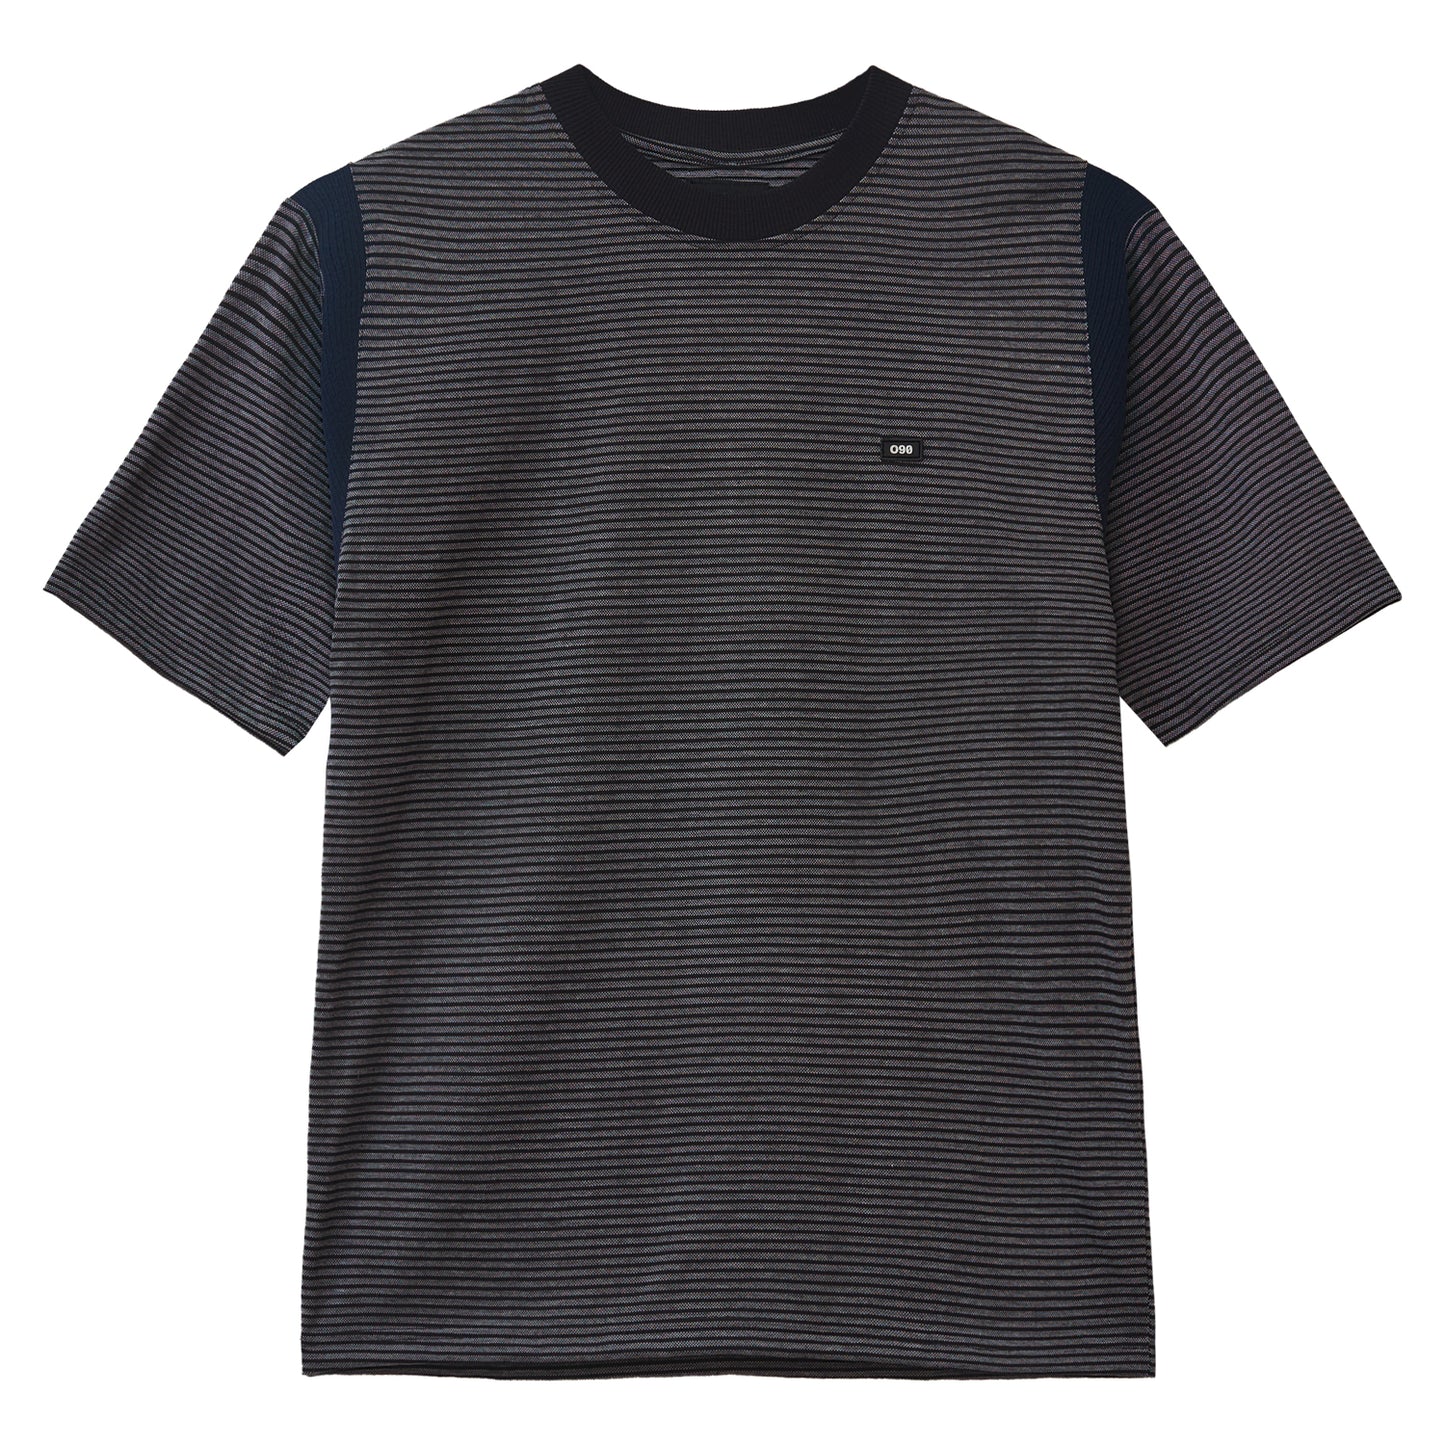 Black Striped Jacquard T-shirt